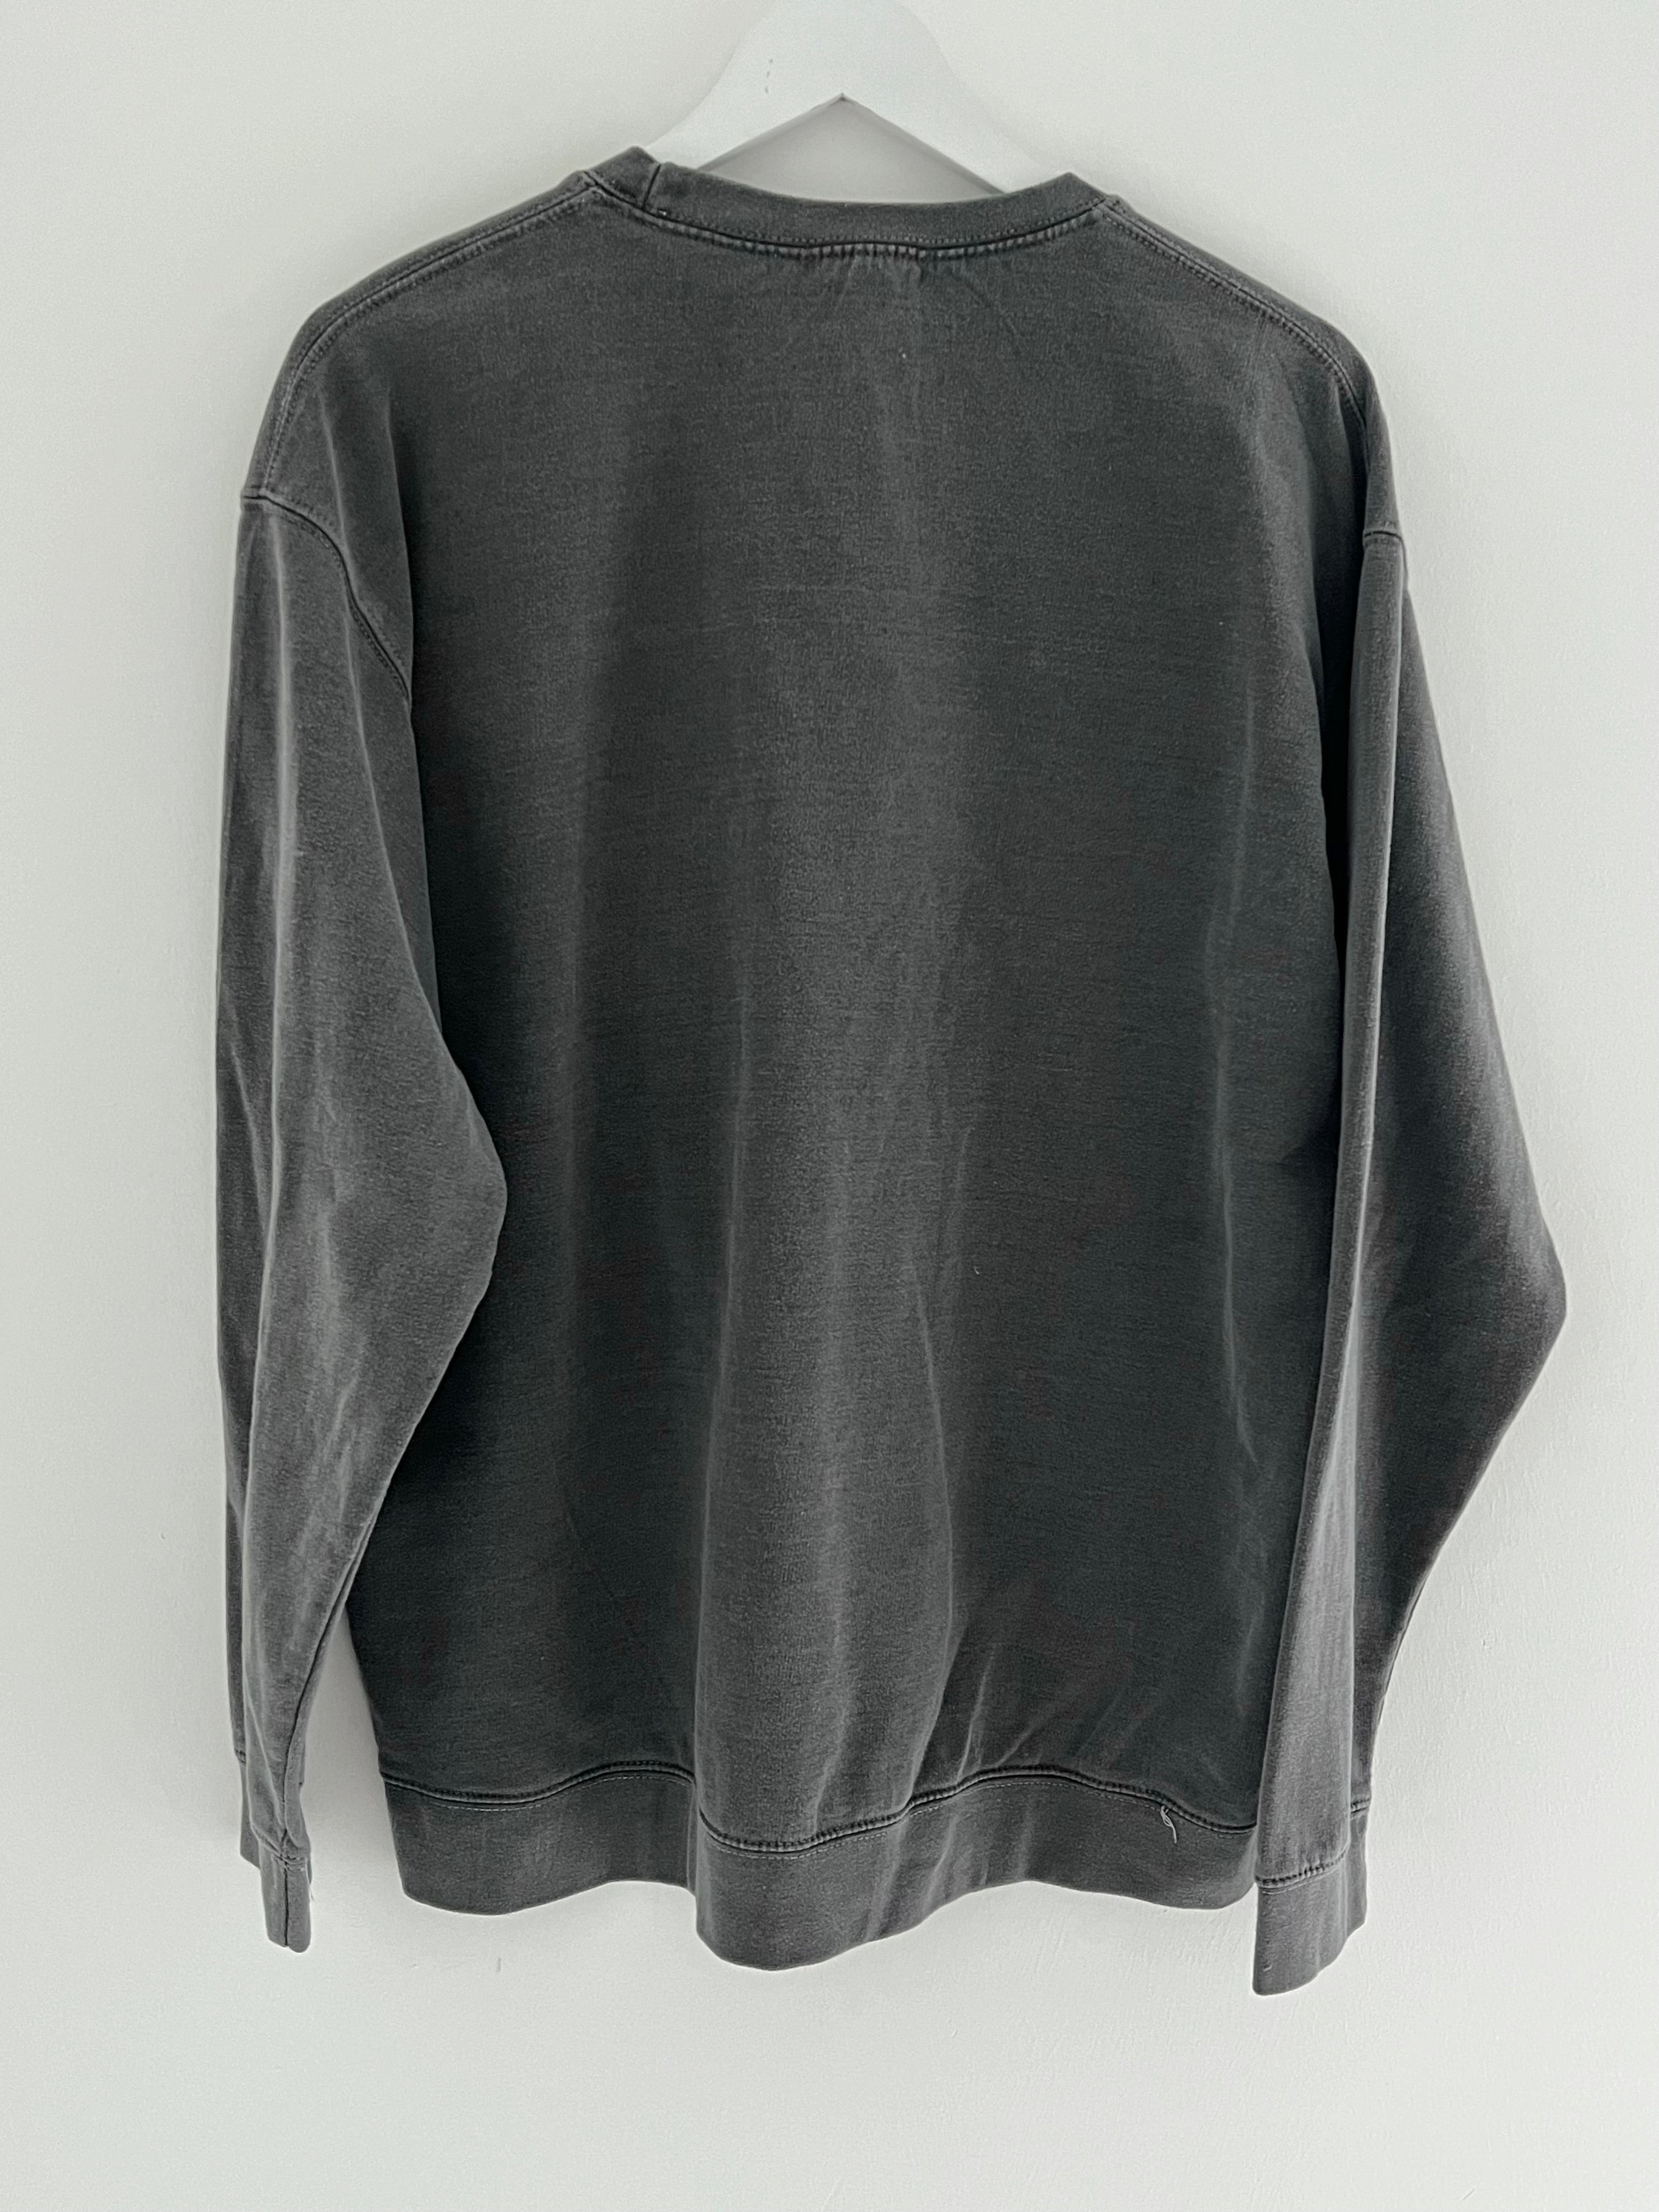 Vintage Wash NYC Sweatshirt in Charcoal